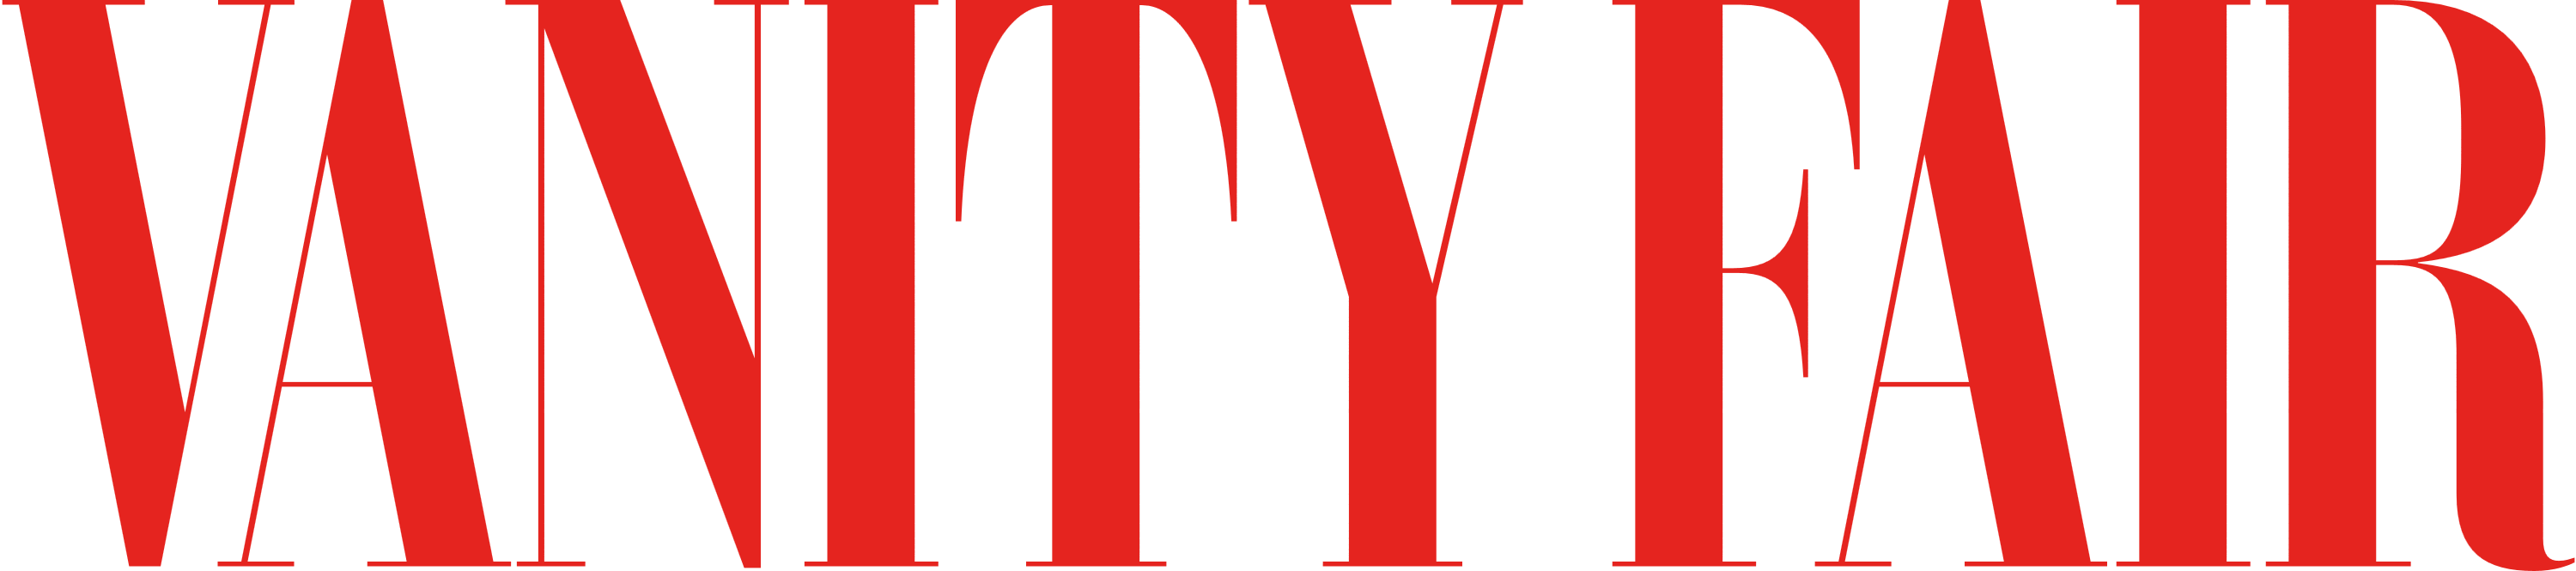 Vanity Fair logo, logotype